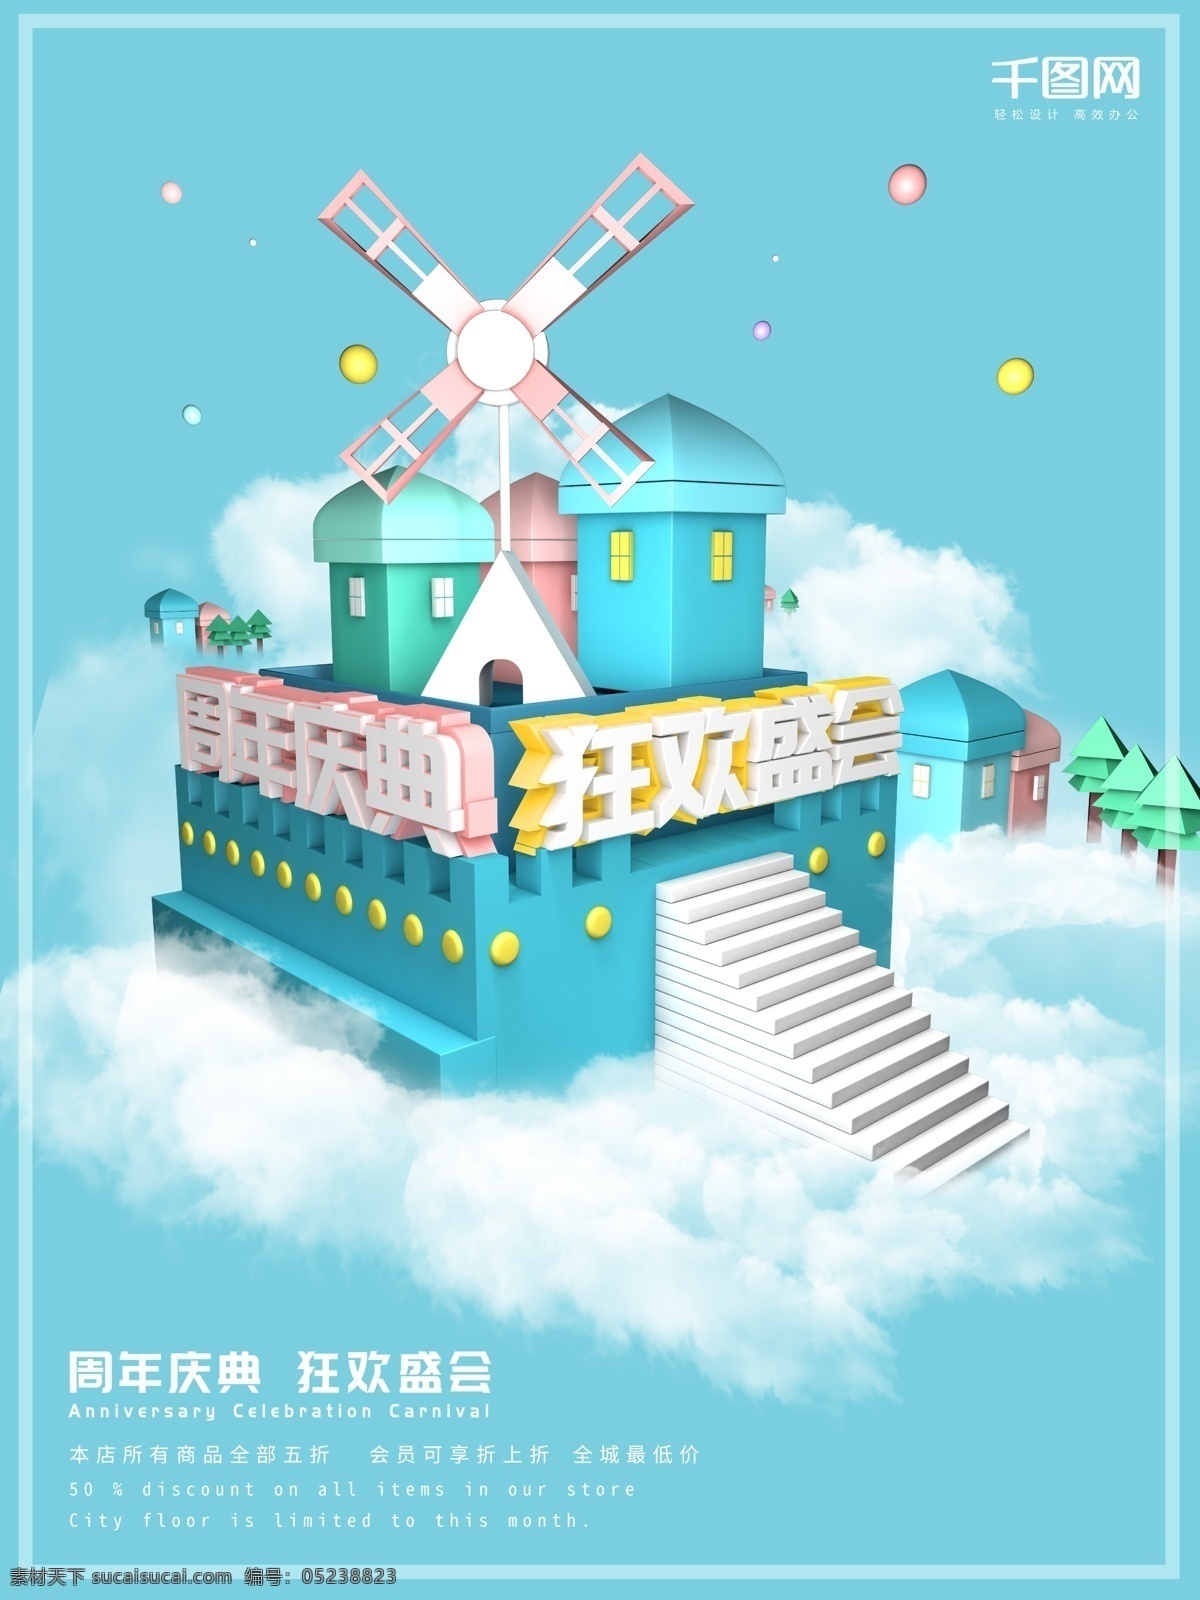 c4d 小 清新 天空之城 周年庆 宣传 促销 海报 云 城堡 小清新 模型 风车 白云 游乐园 彩色